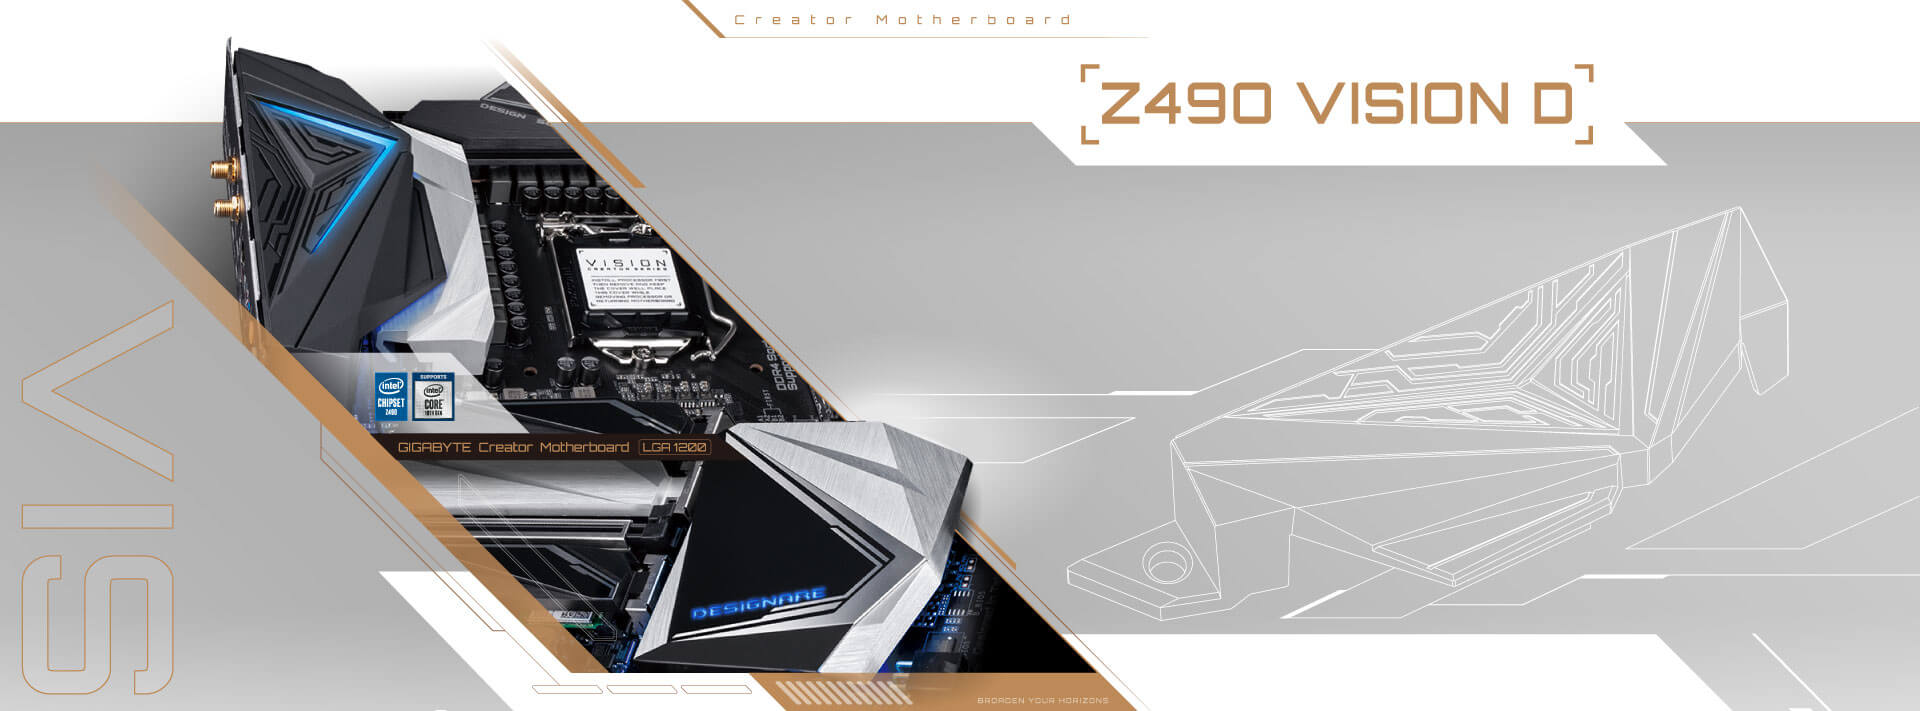 Z490 VISION D (rev. 1.x) Key Features | Motherboard - GIGABYTE Global